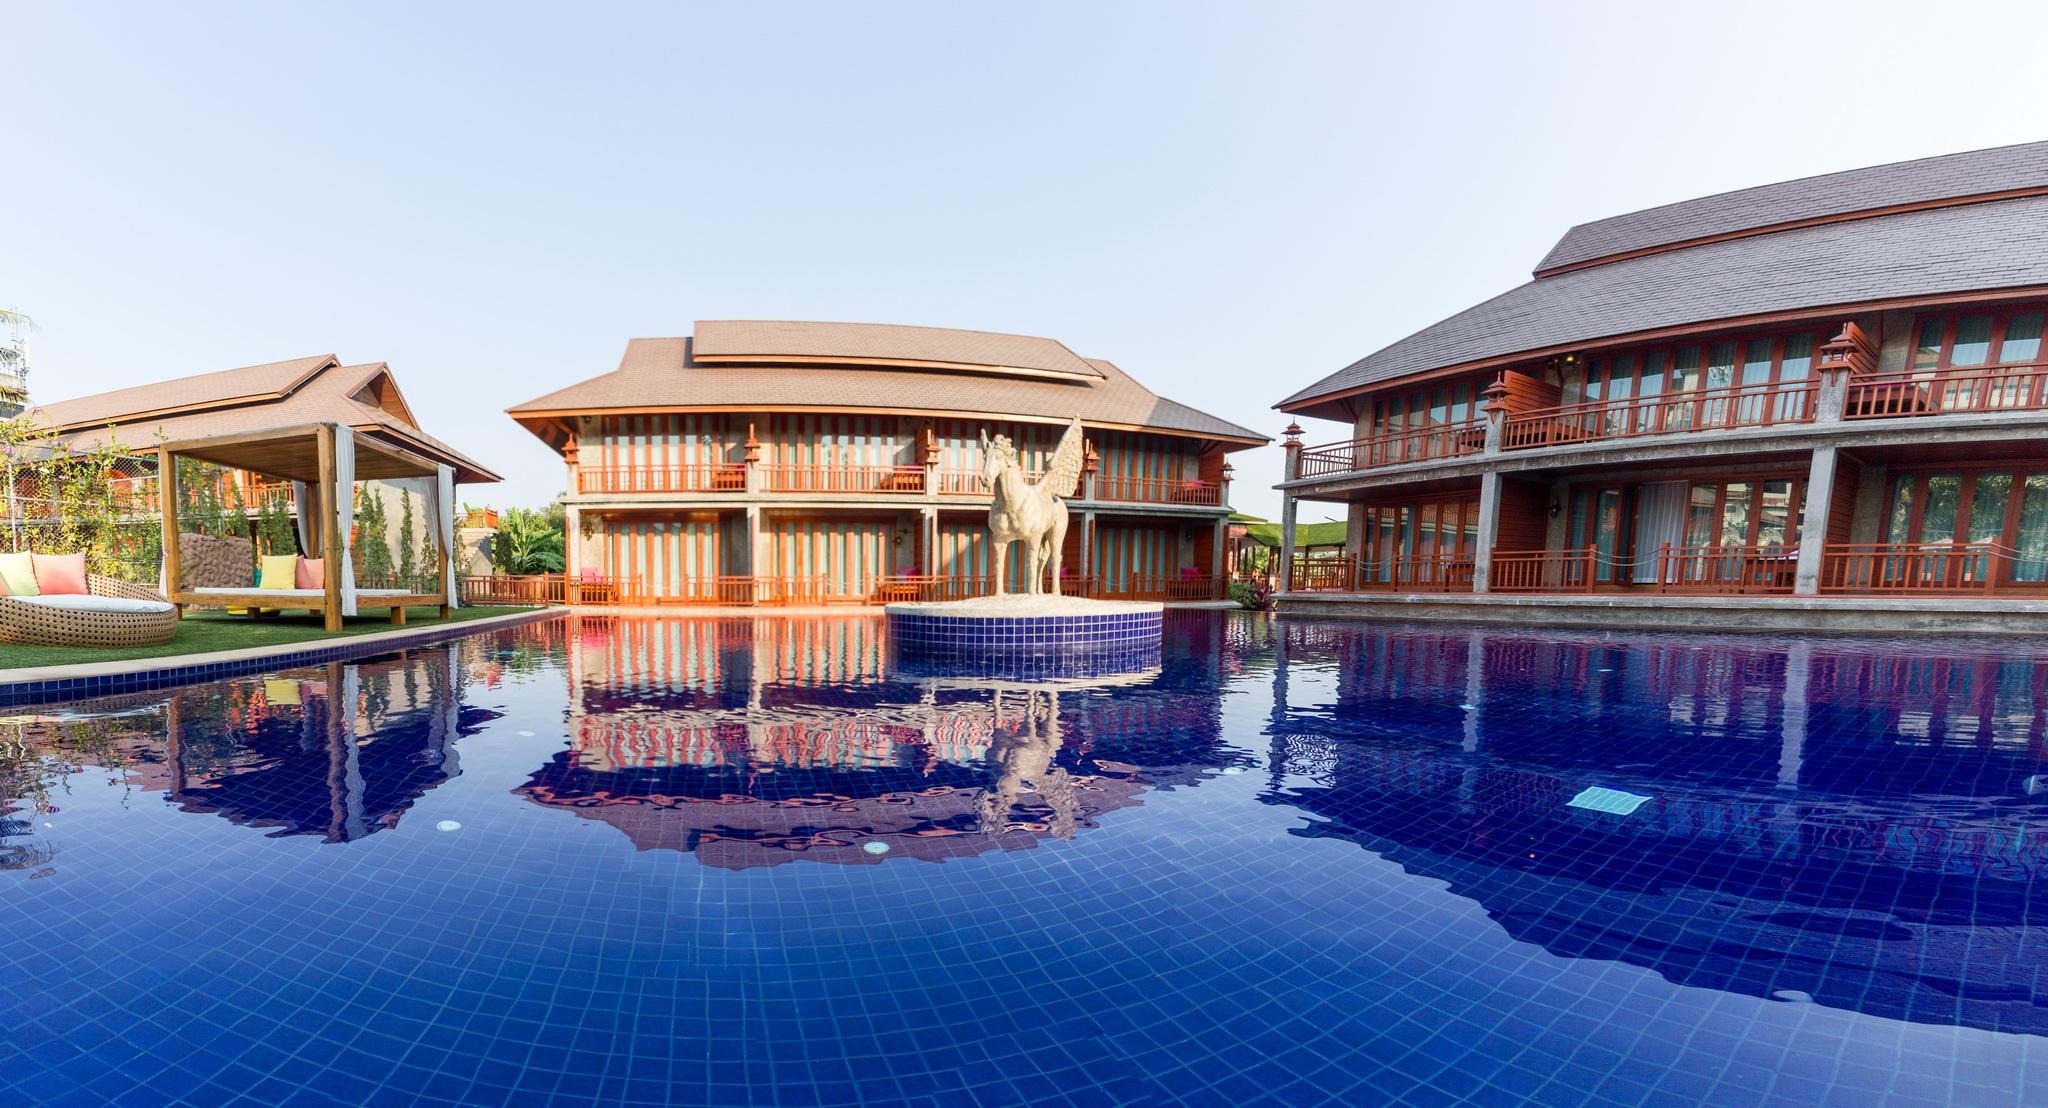 The Chaya resort and spa image